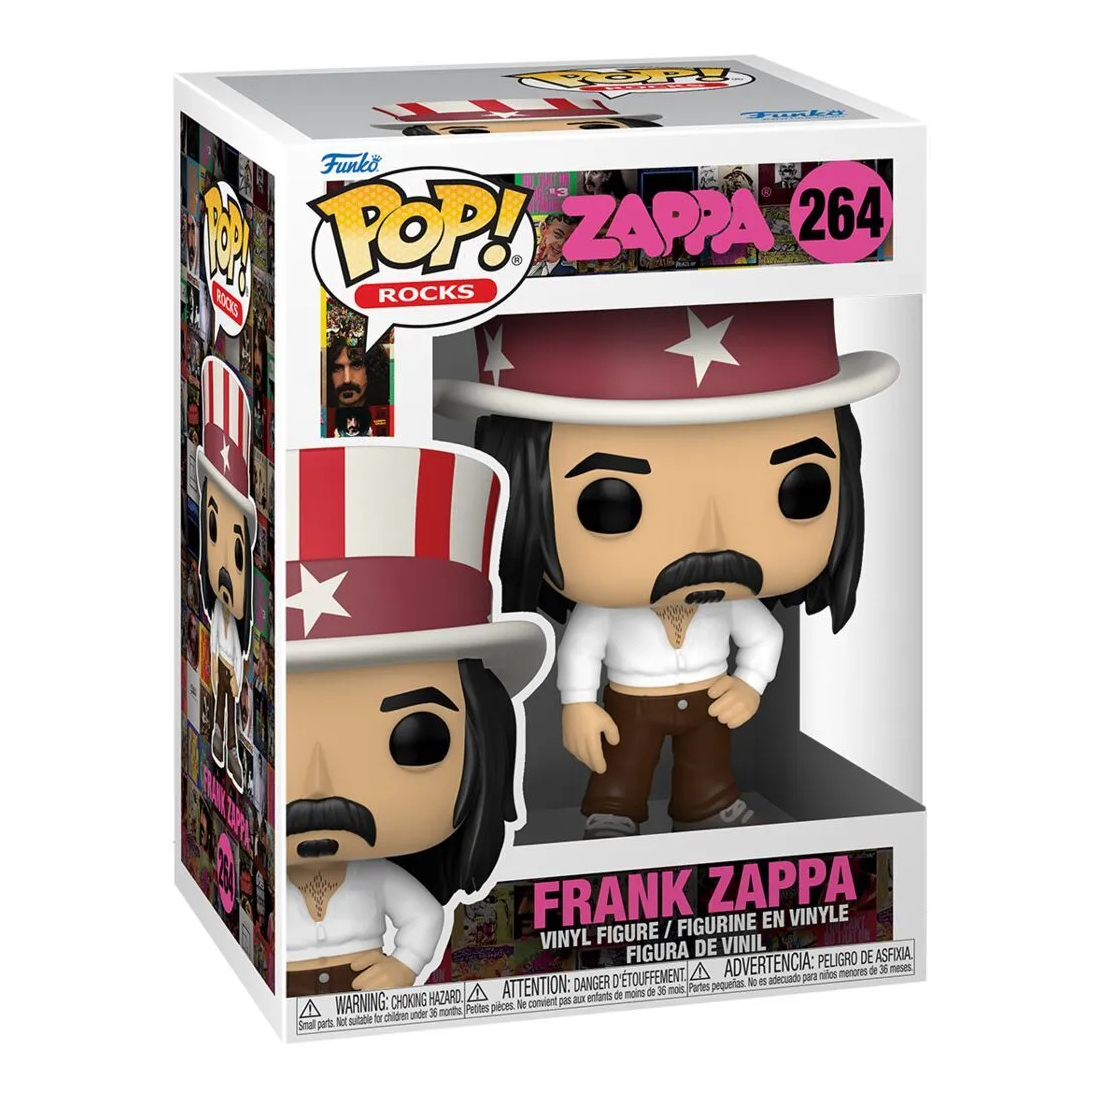 Фигурка Funko Pop! Rocks Frank Zappa фигурка криса стэплтона pop rocks funko